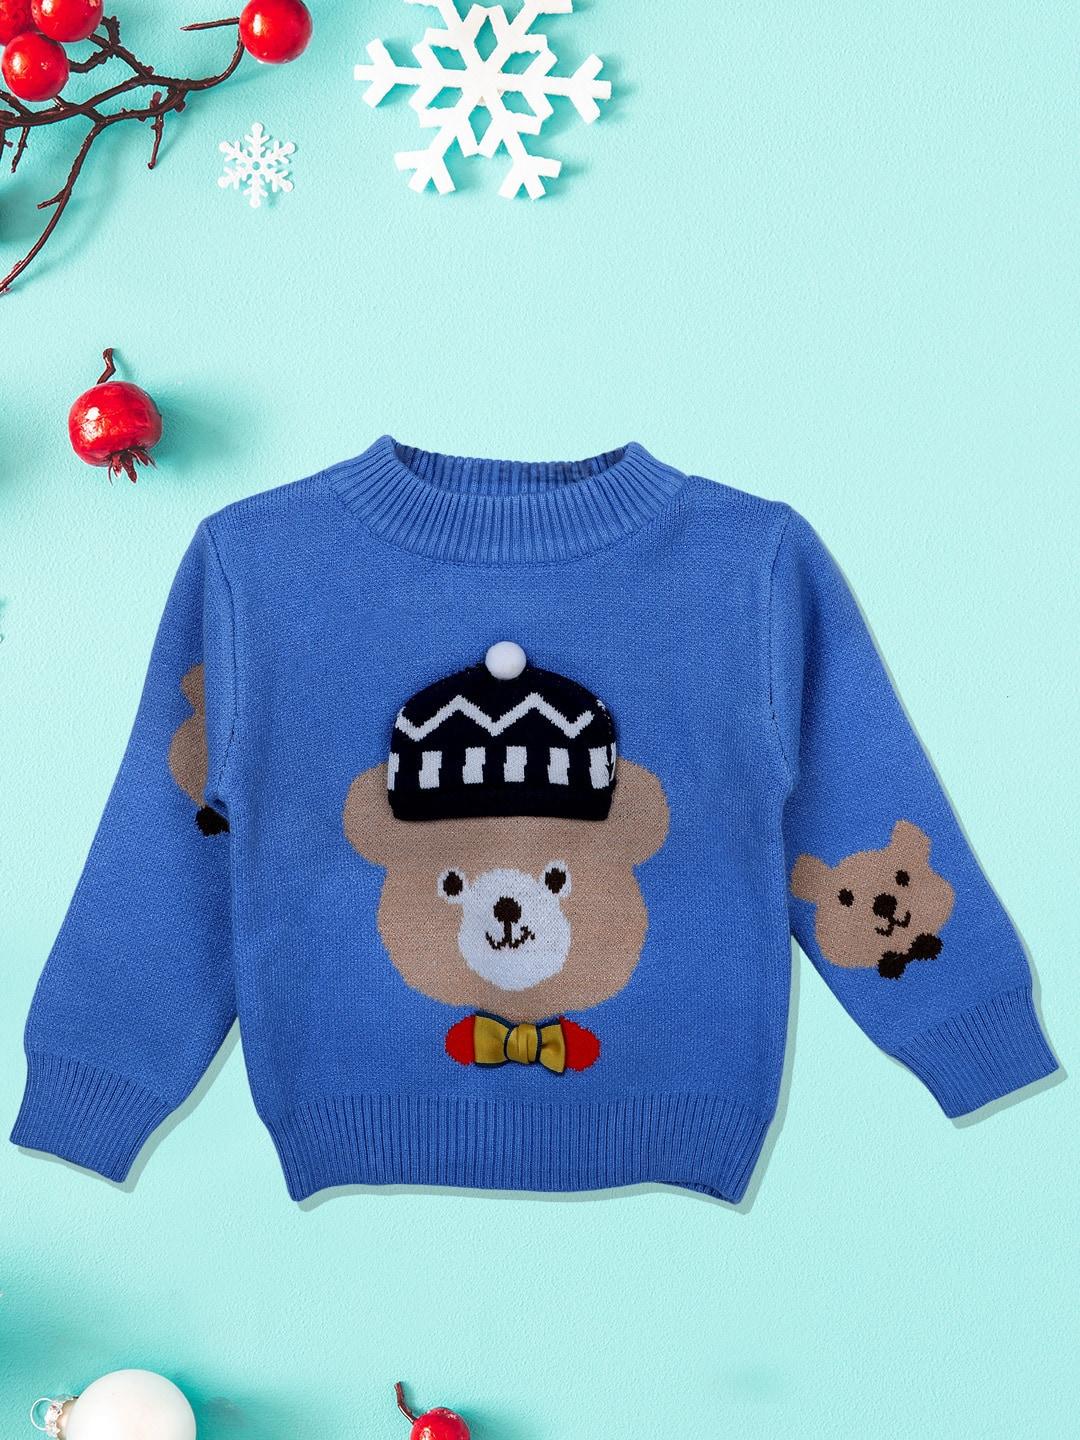 Baby Moo Unisex Kids Blue & Black Mr. Bear Premium Full Sleeves Knitted Sweater Pullover